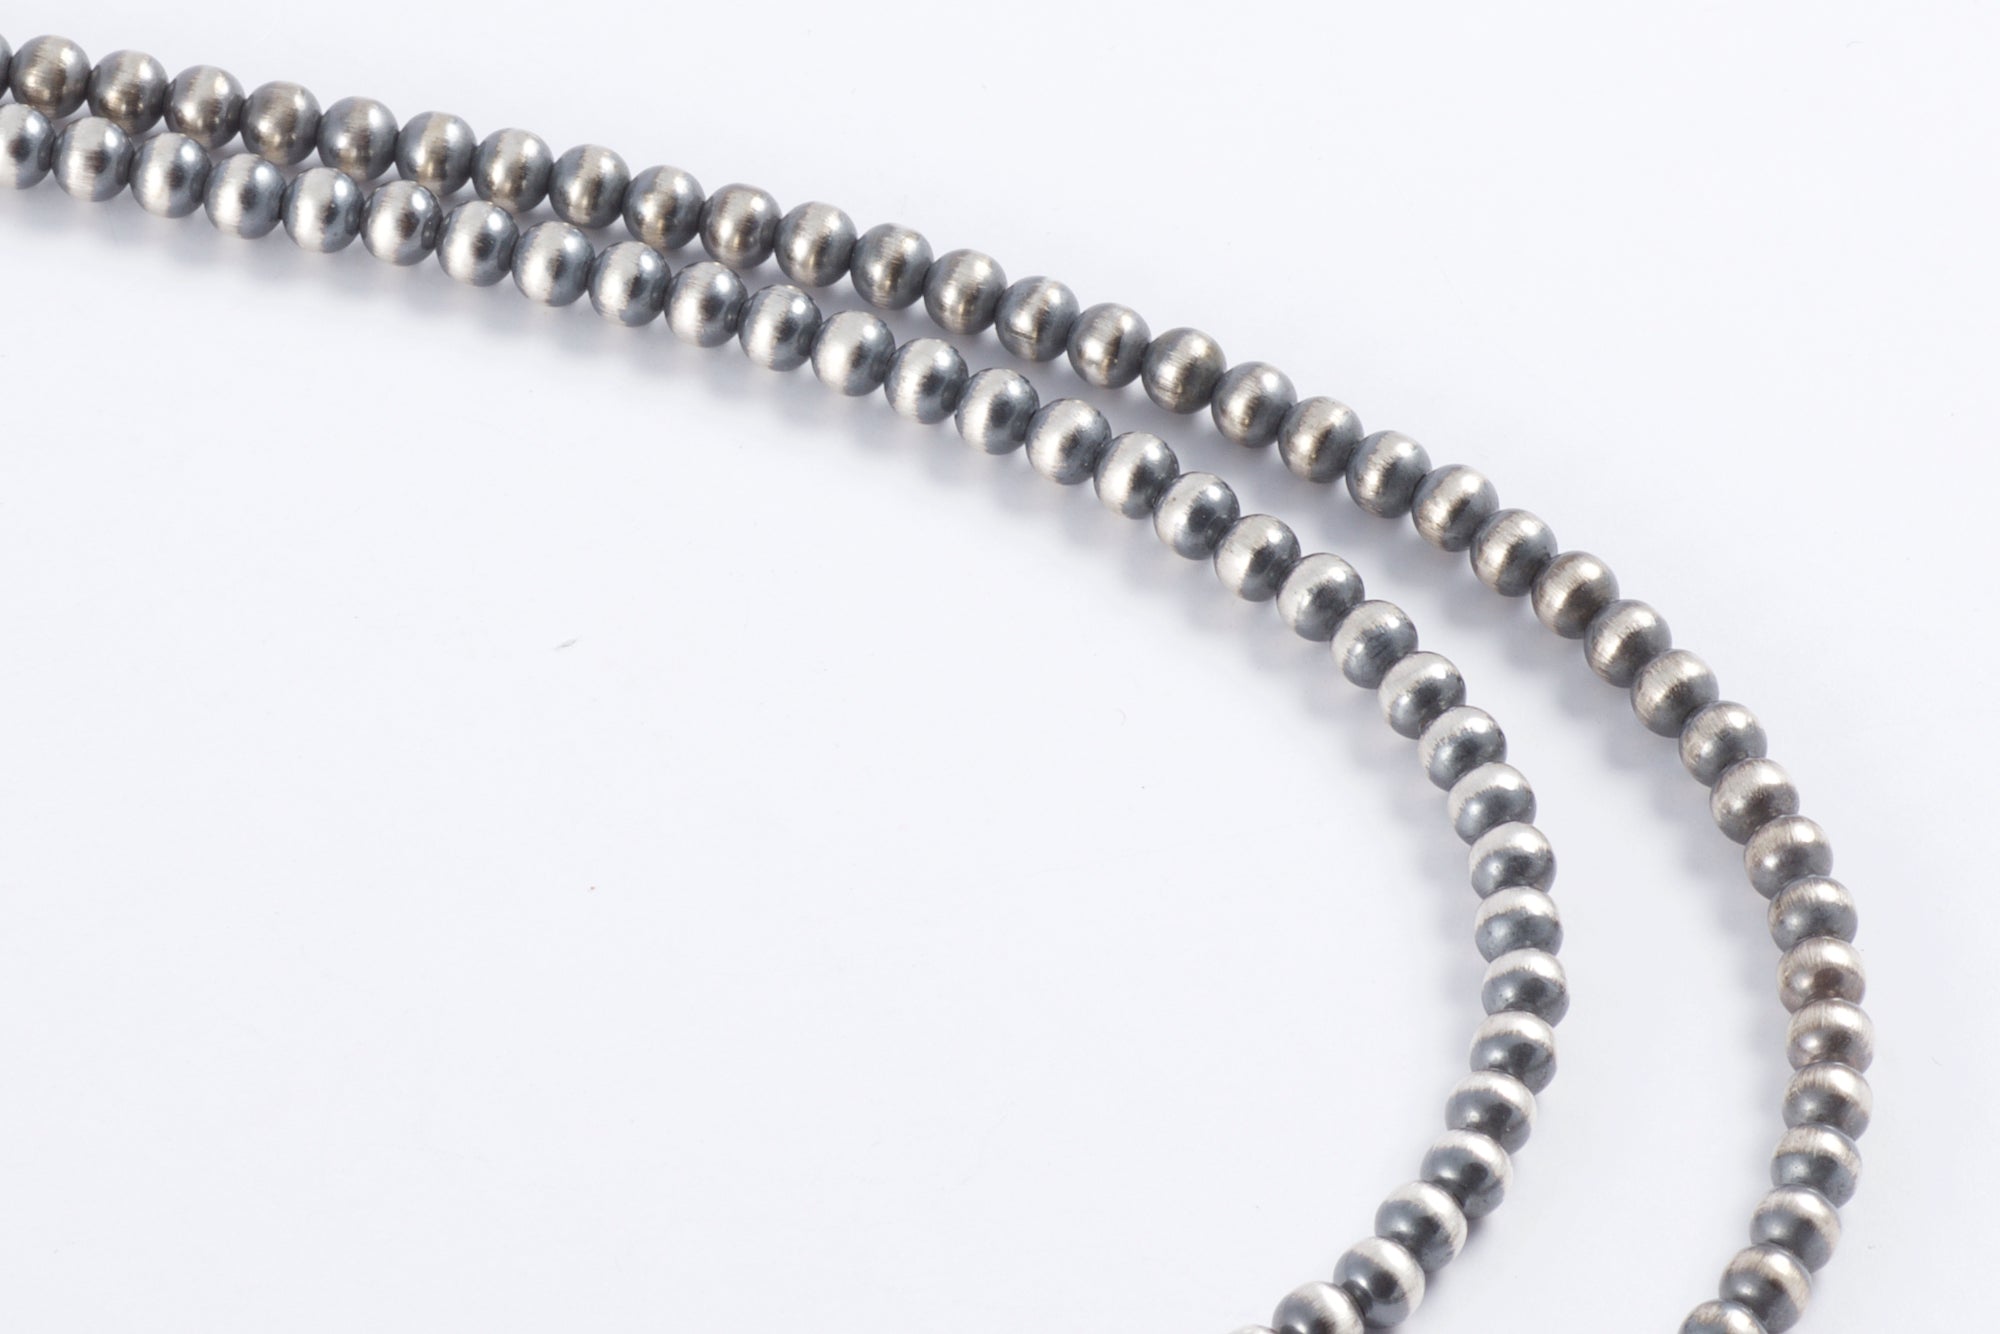 Navajo Pearls Necklace - 3mm pearls